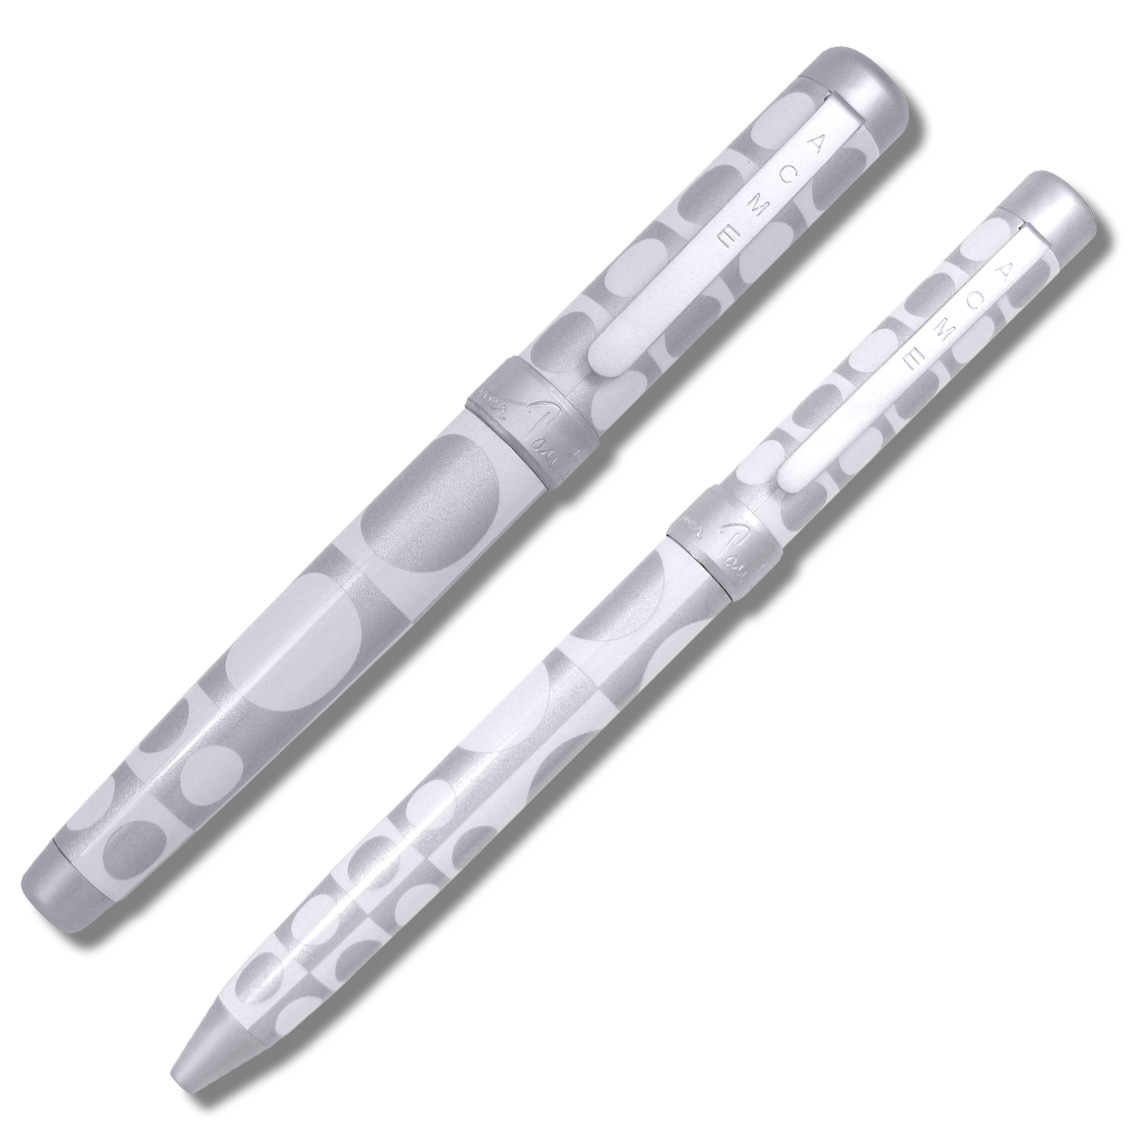 GEOMETRI WHITE Pen Set